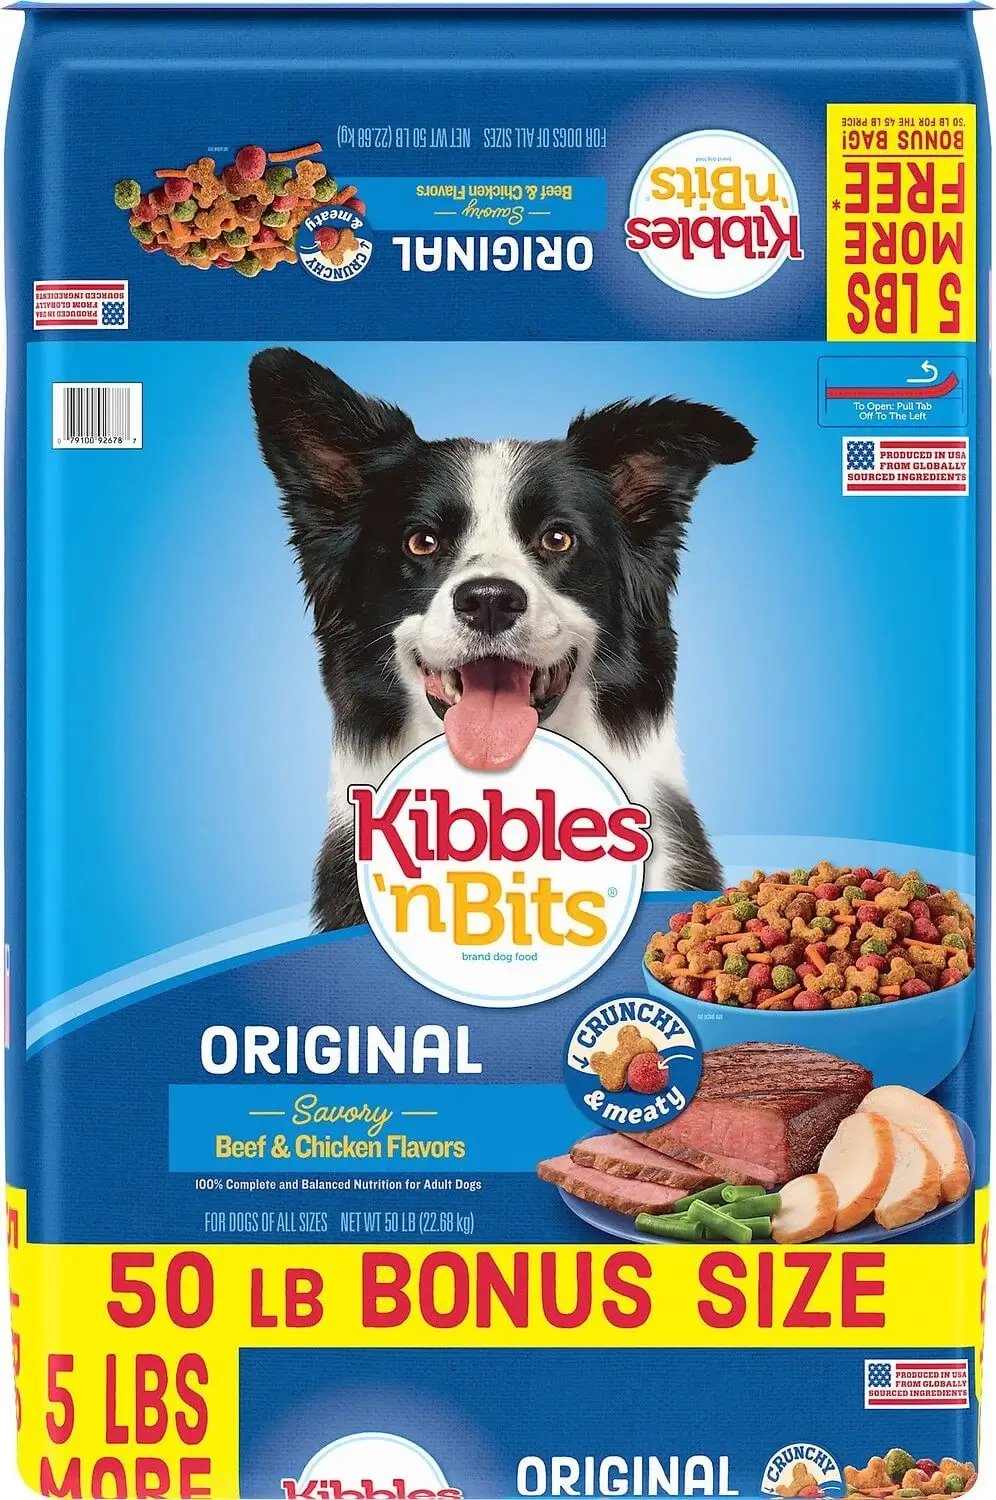 Kibbles ‘n Bits Dog Food Review (Dry)